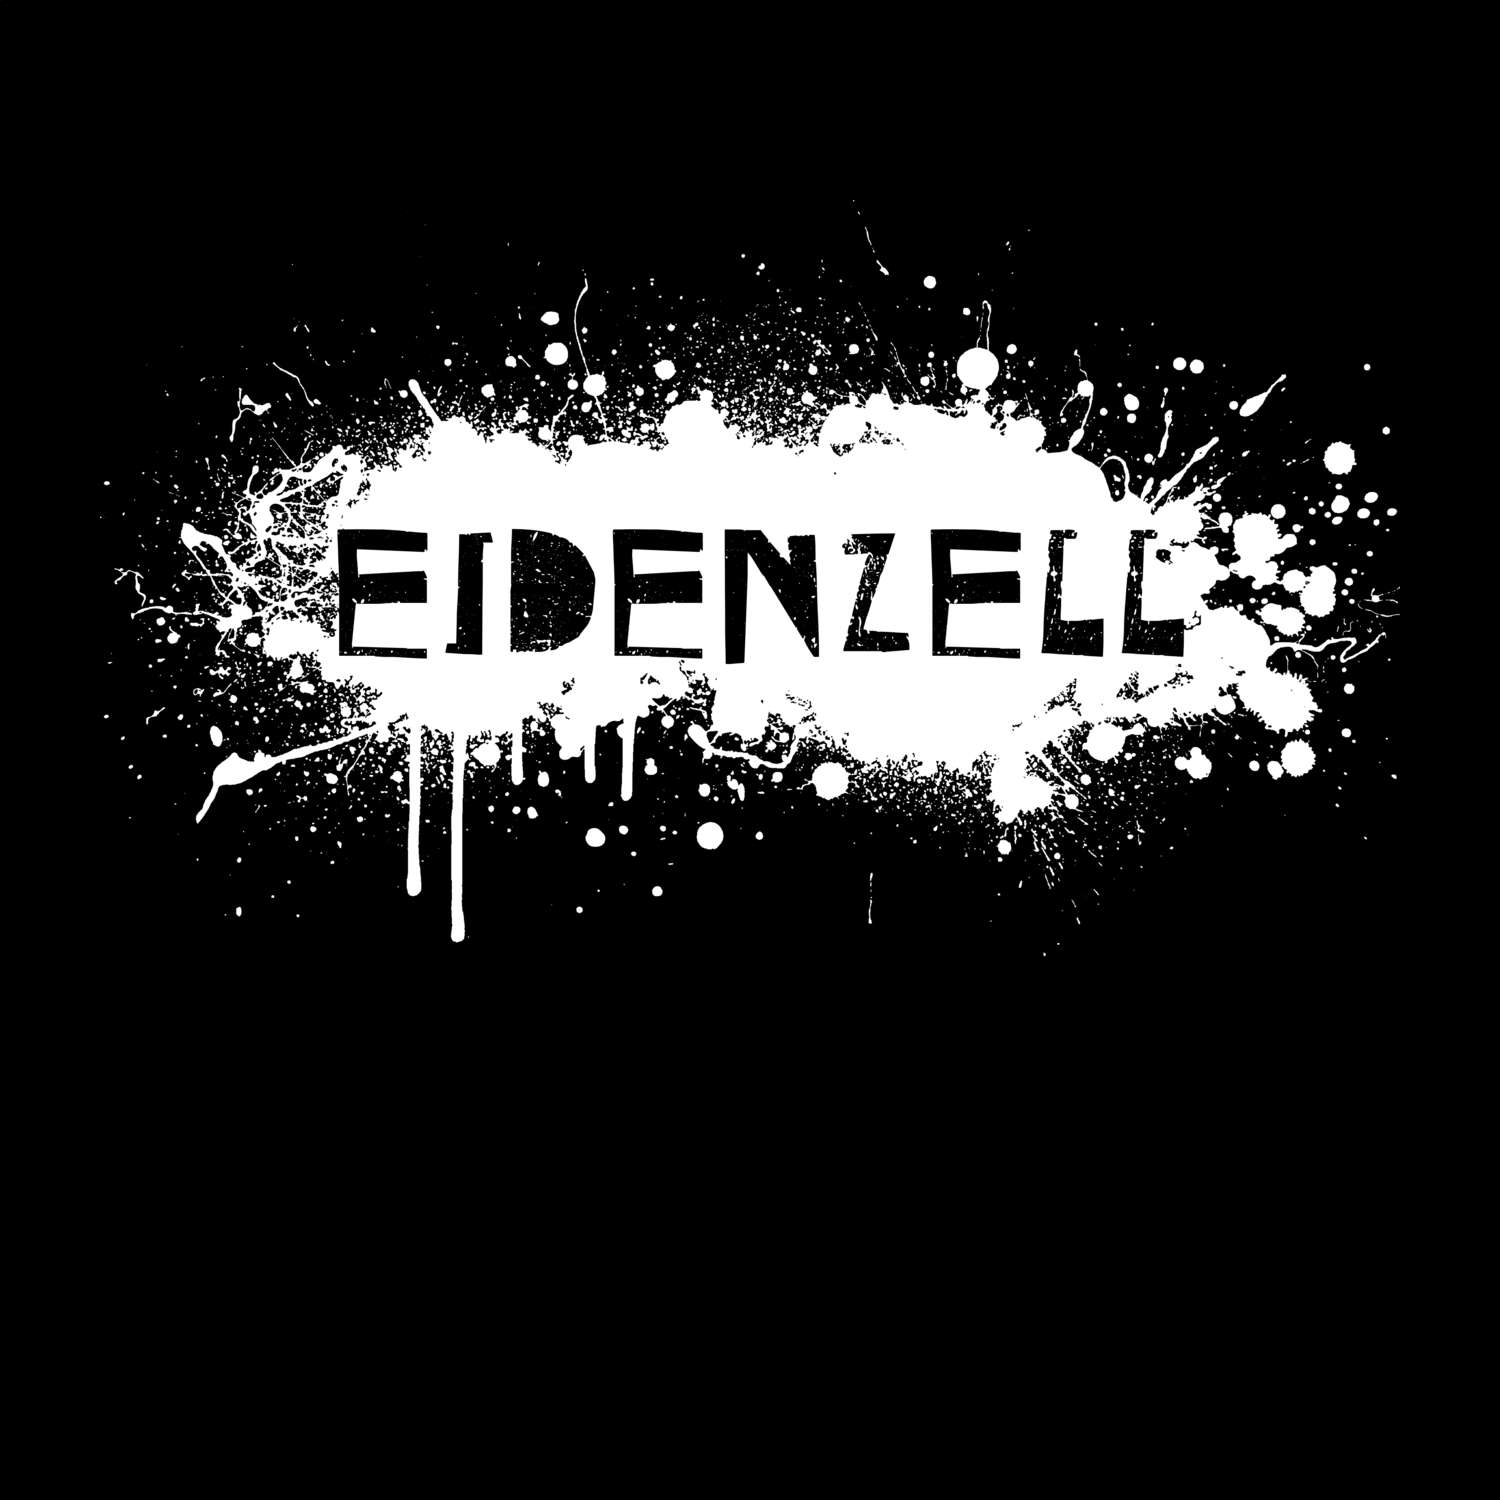 Eidenzell T-Shirt »Paint Splash Punk«